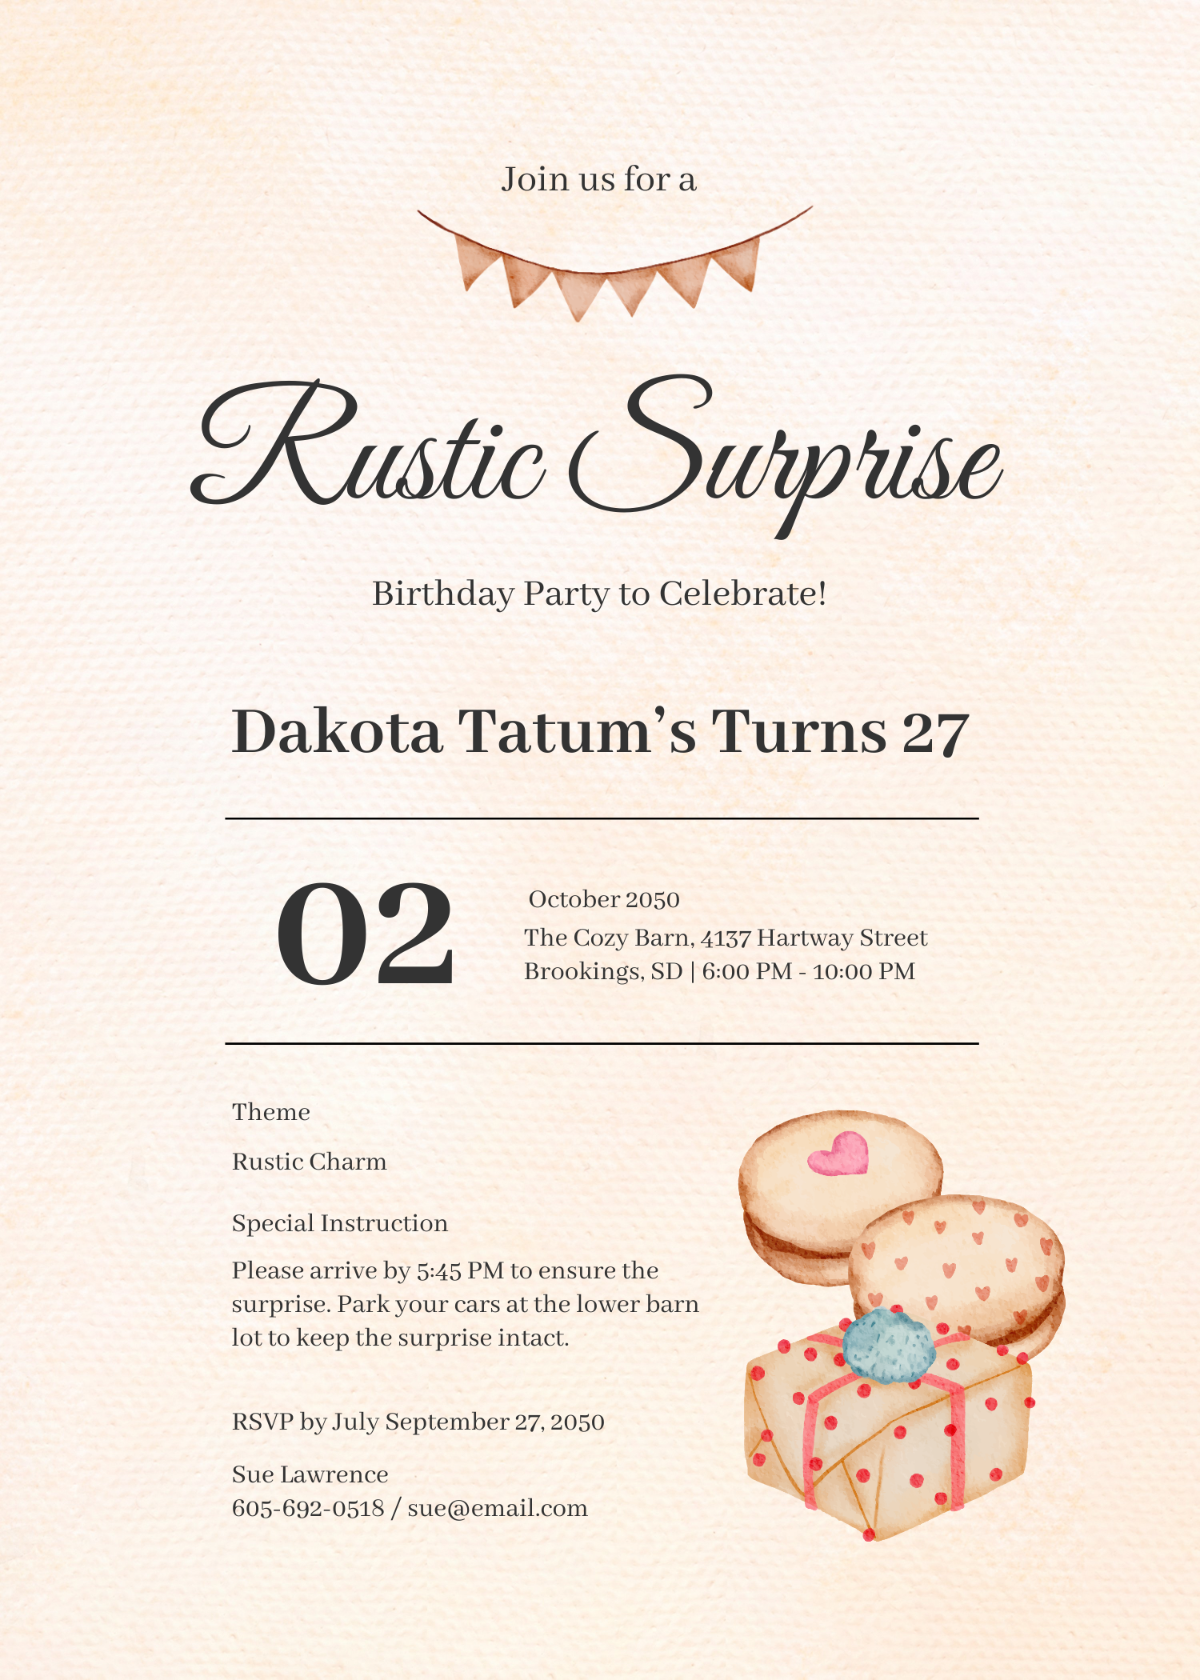 Rustic Surprise Birthday Party Invitation